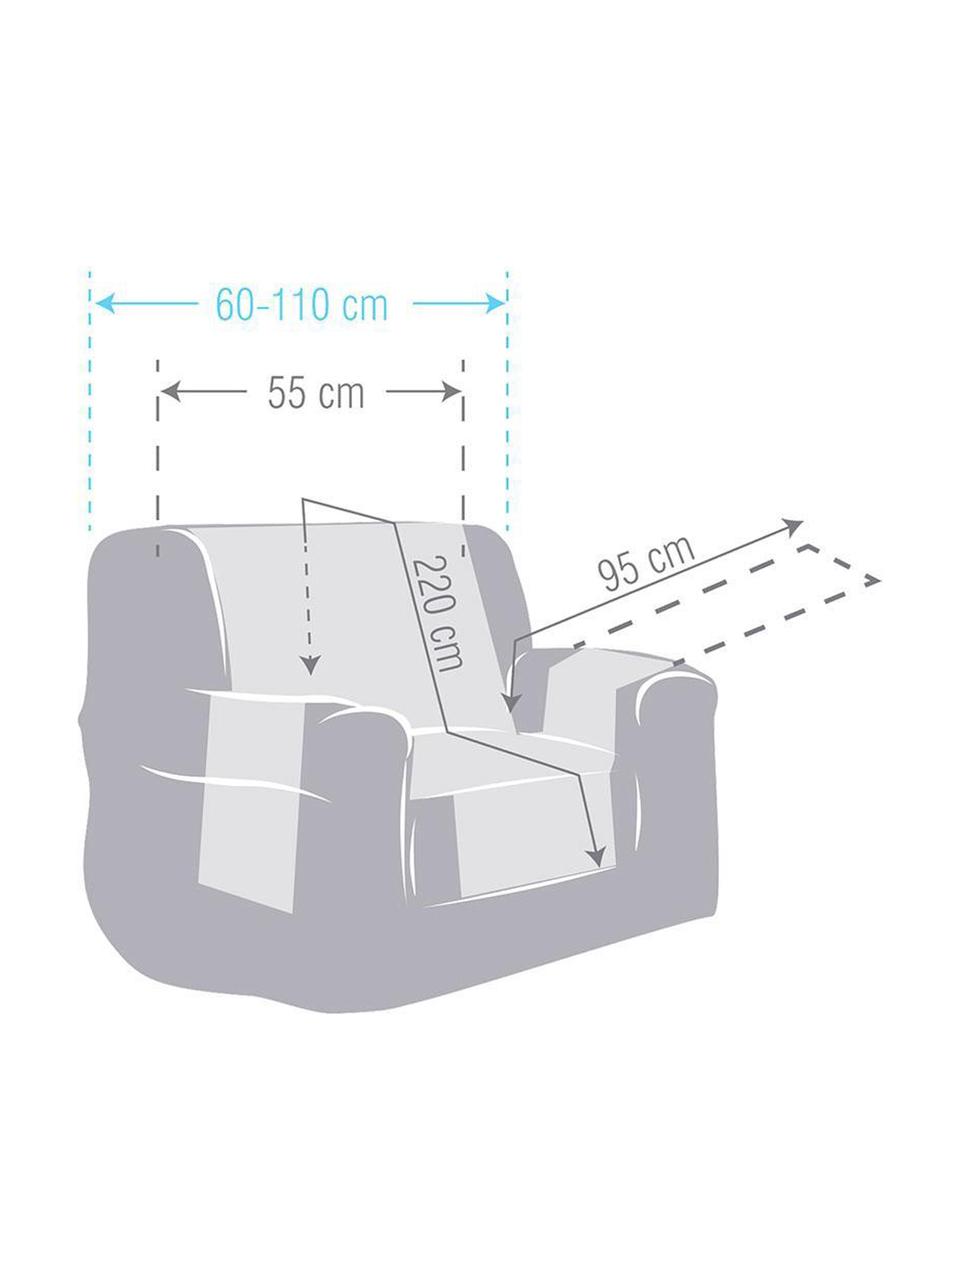 Narzuta na fotel Levante, 65% bawełna, 35% poliester, Szary, S 55 x D 220 cm